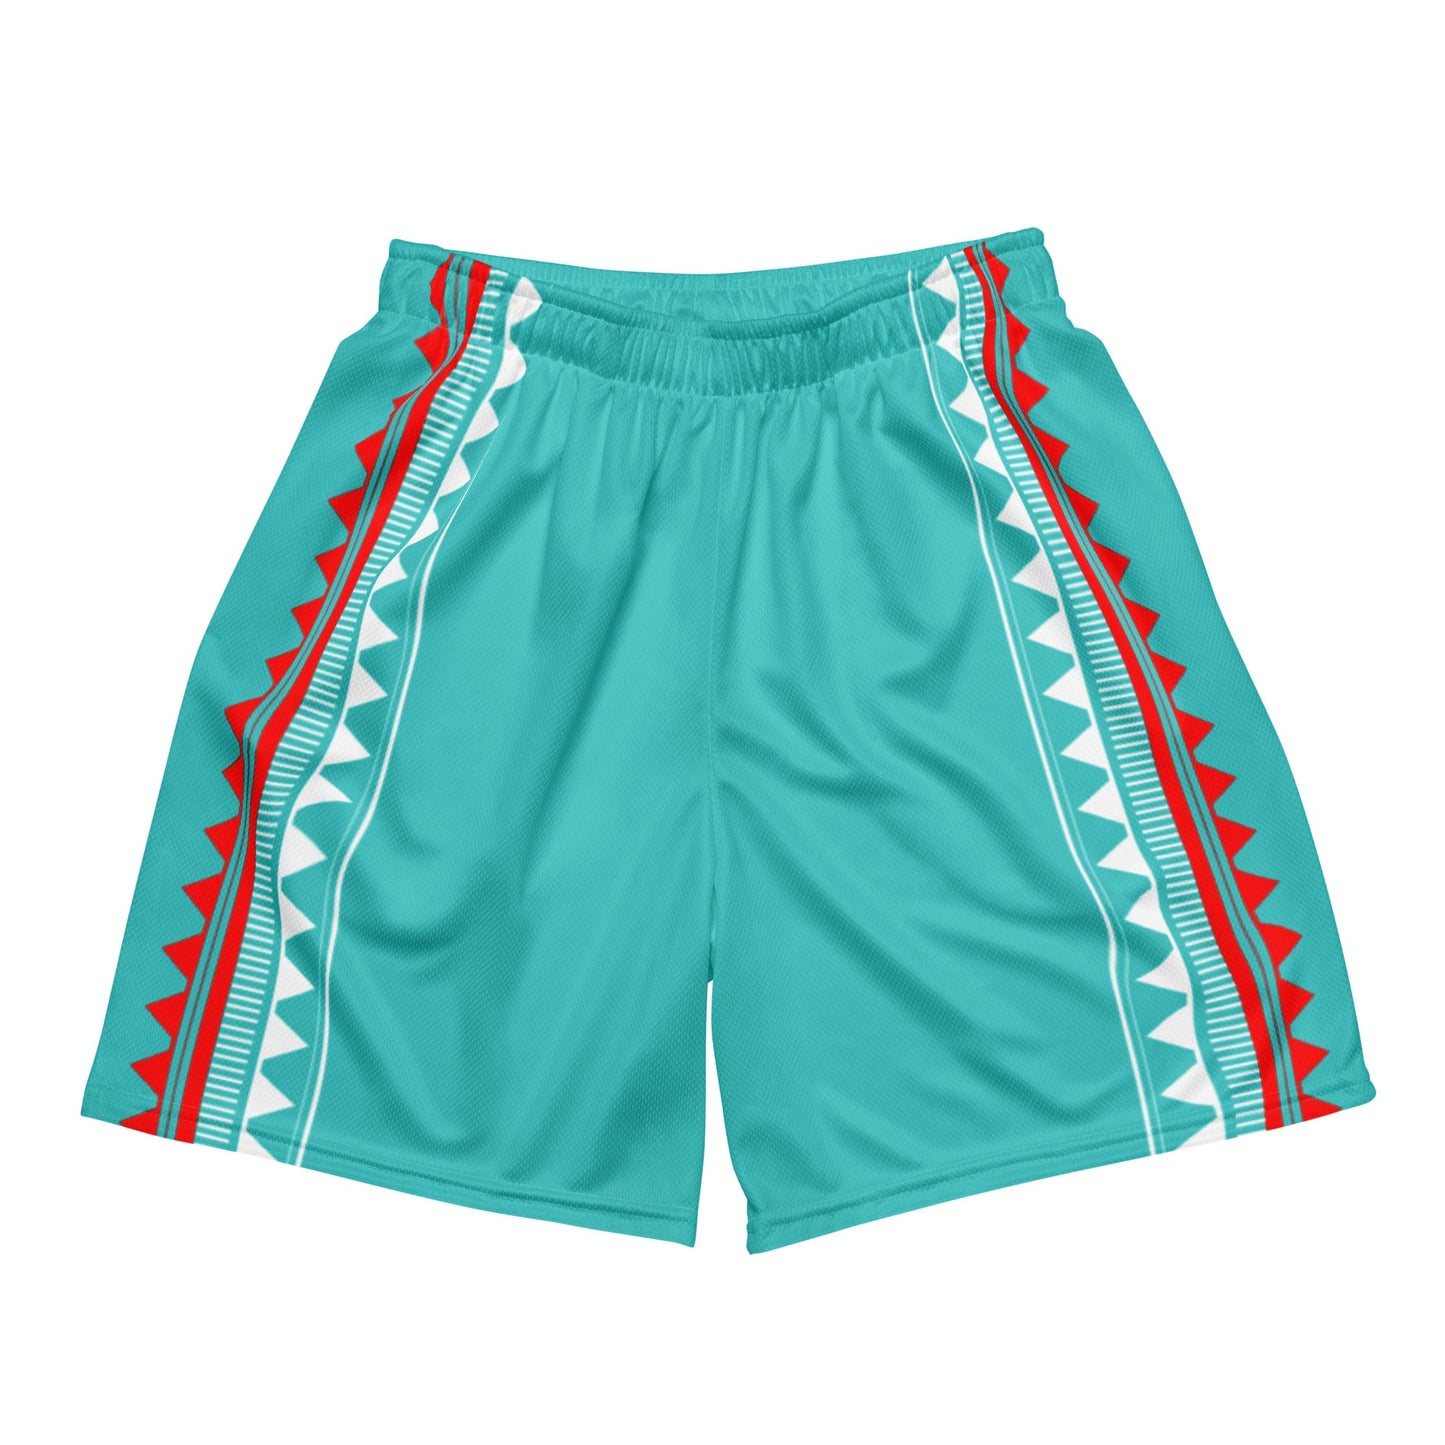 Native mesh shorts - Nikikw Designs